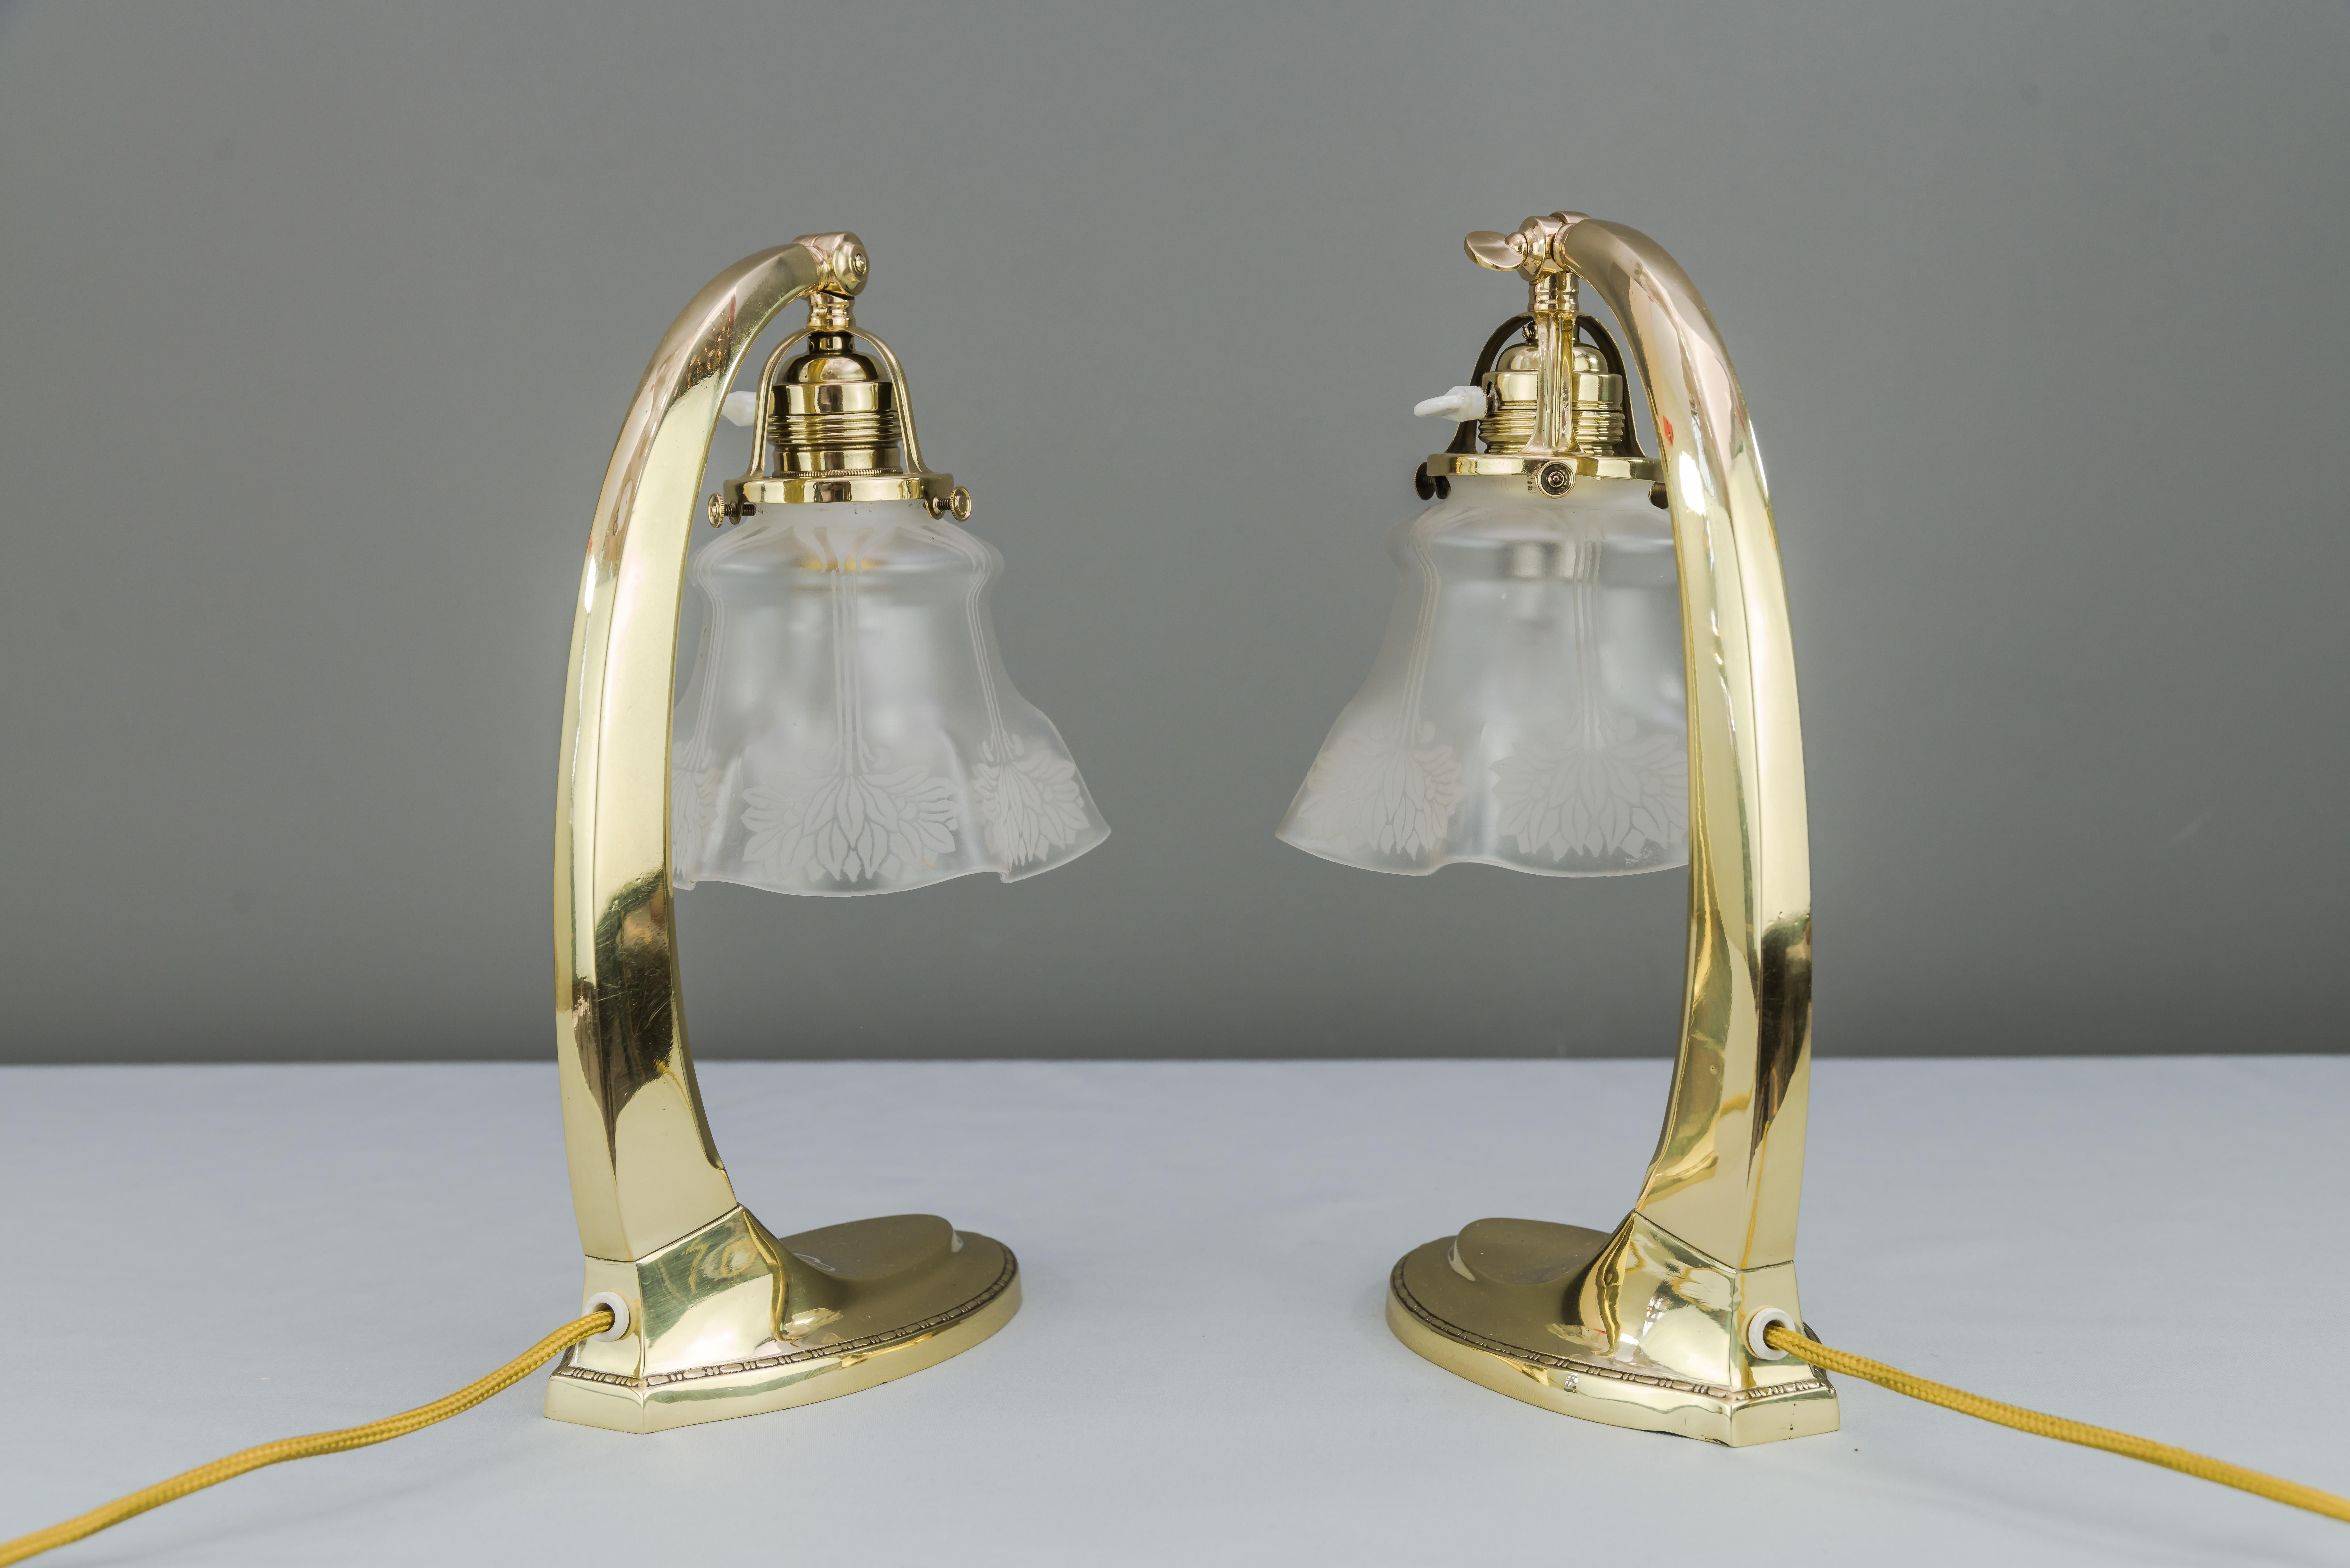 Two Jugendstil Table Lamps 1907 with Original Glas Shades 1